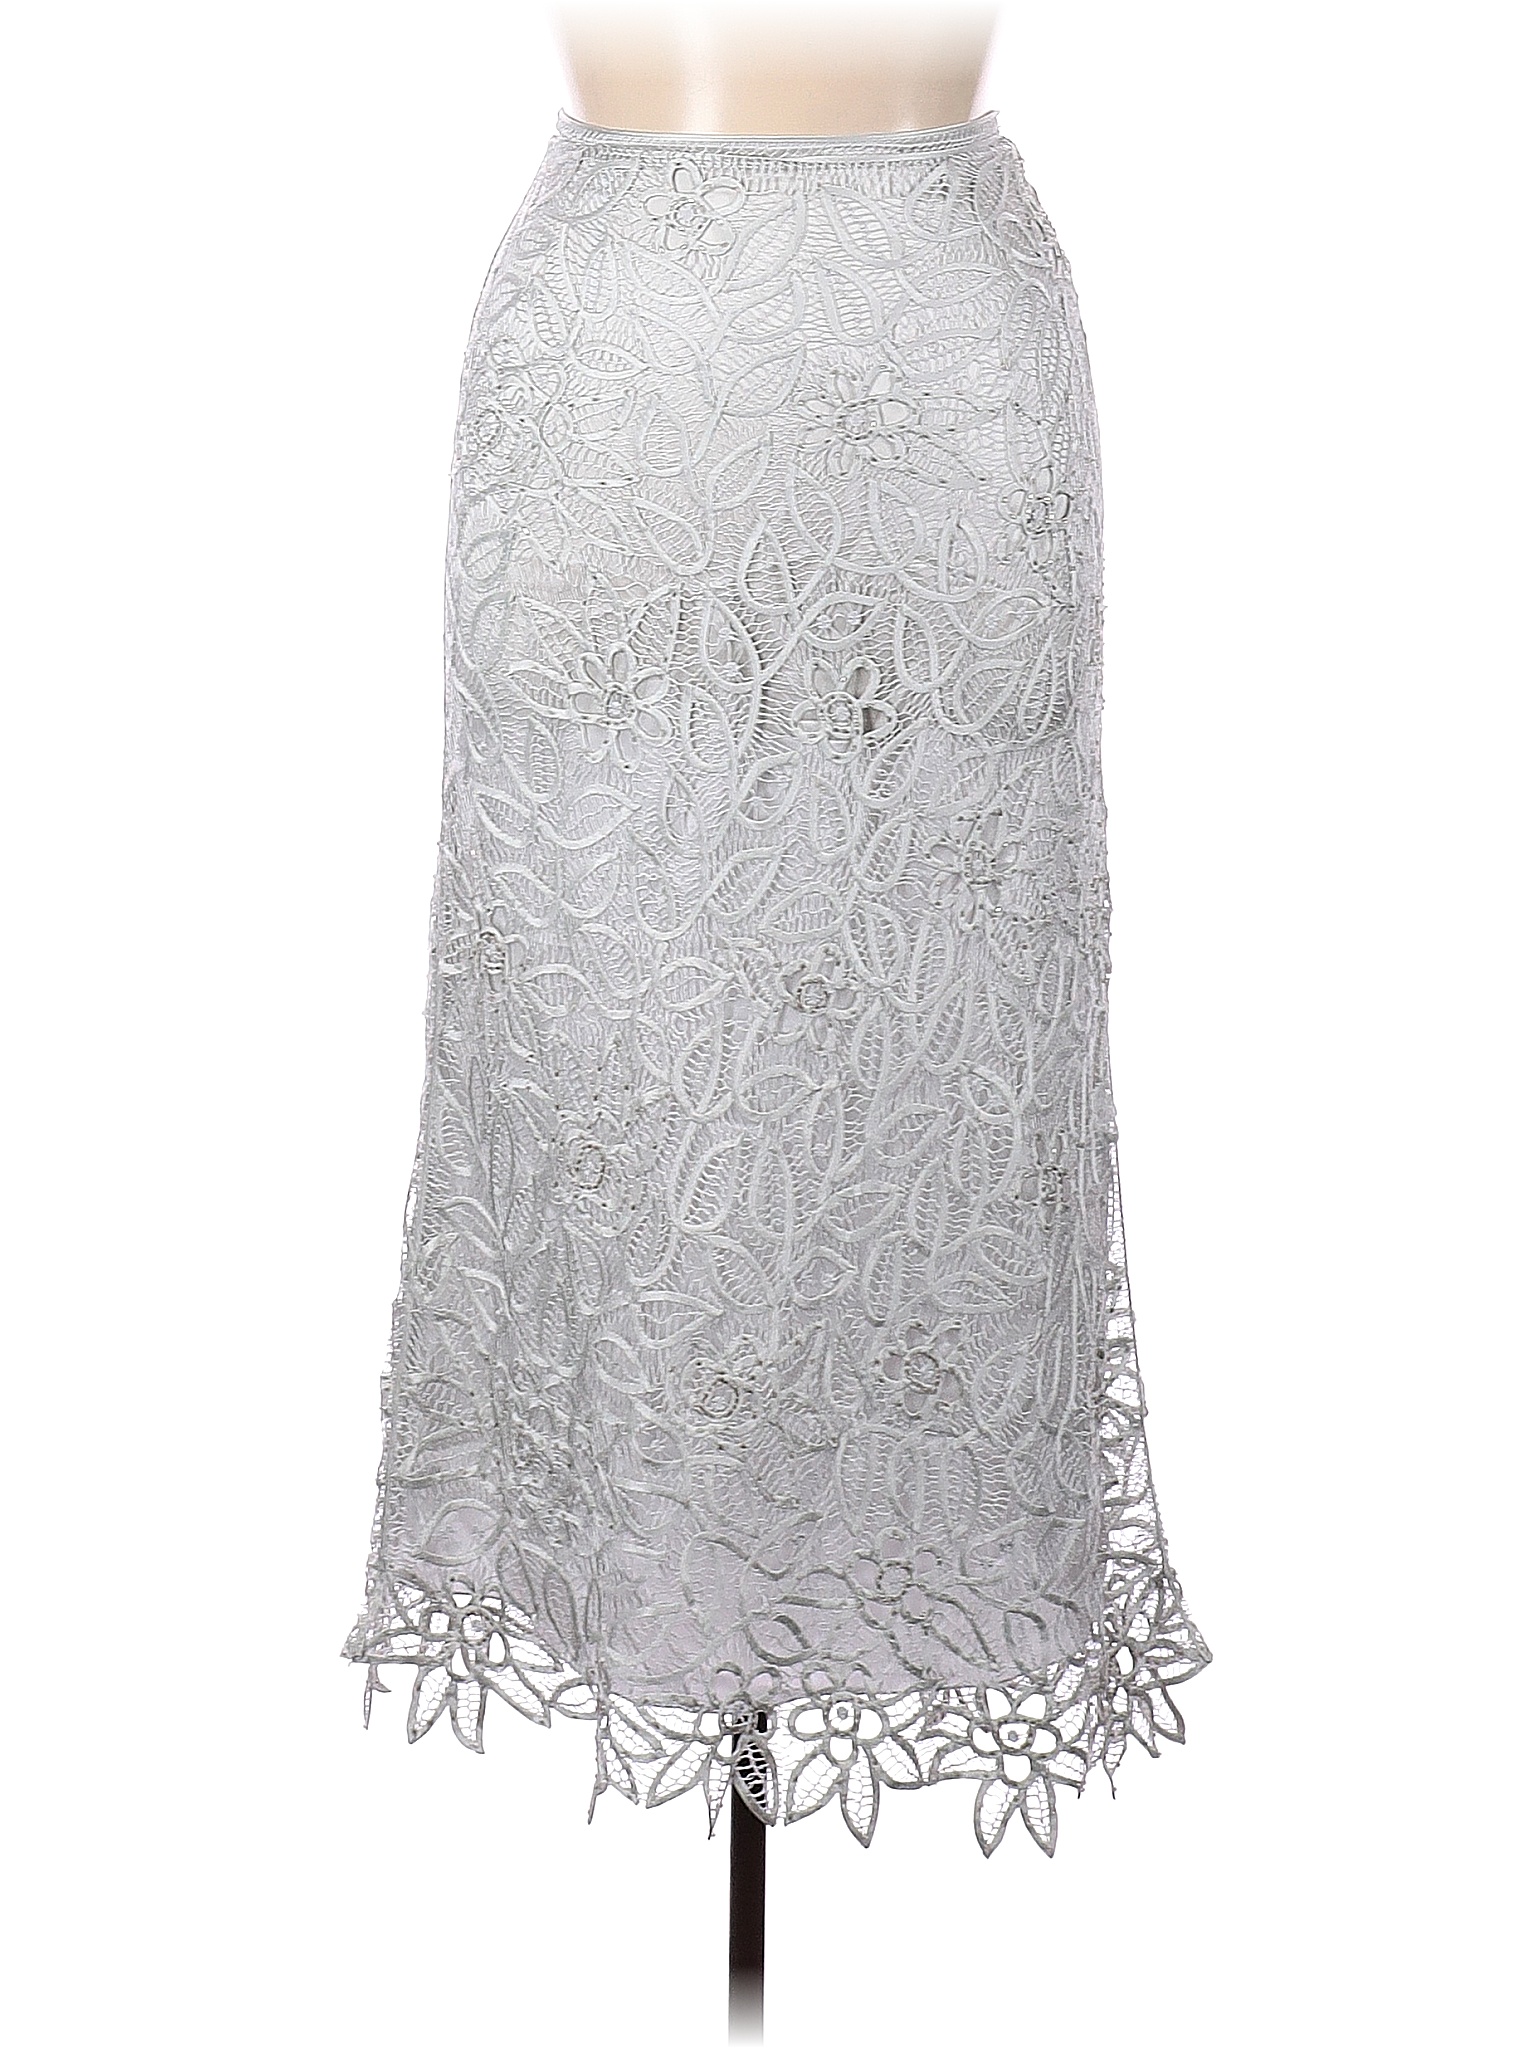 Silken Poetry 100% Silk Floral Gray Silk Skirt Size XL - 43% off | thredUP